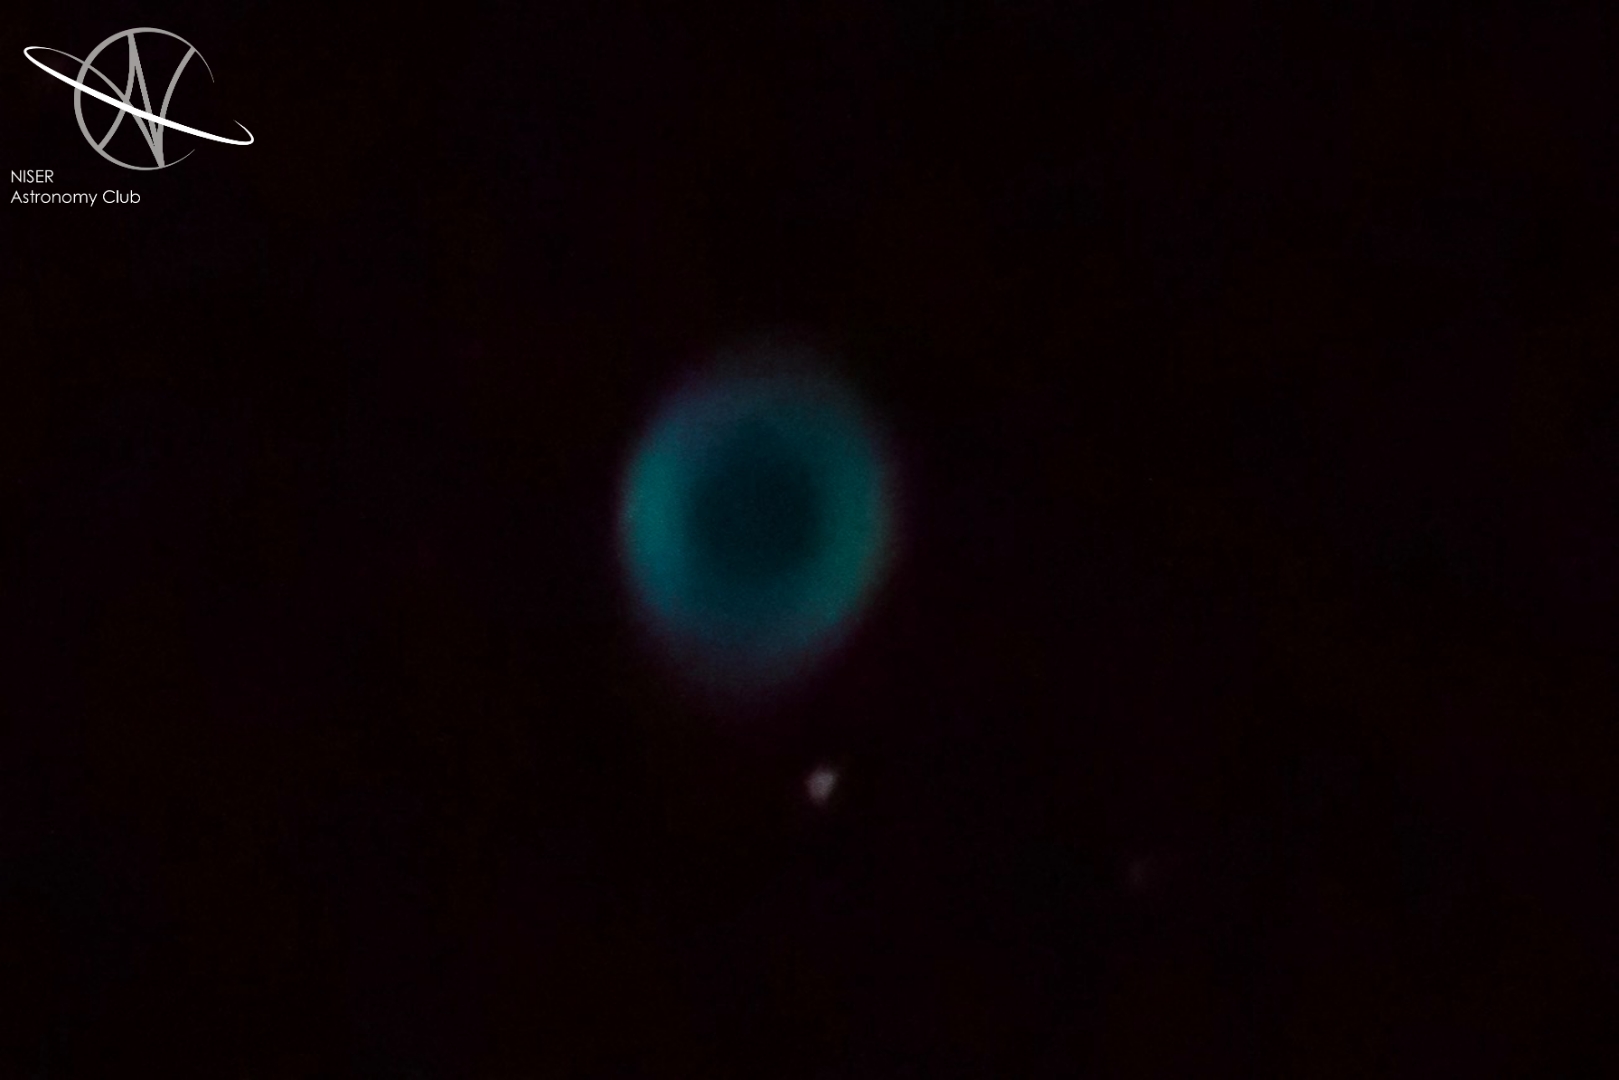 The Ring Nebula